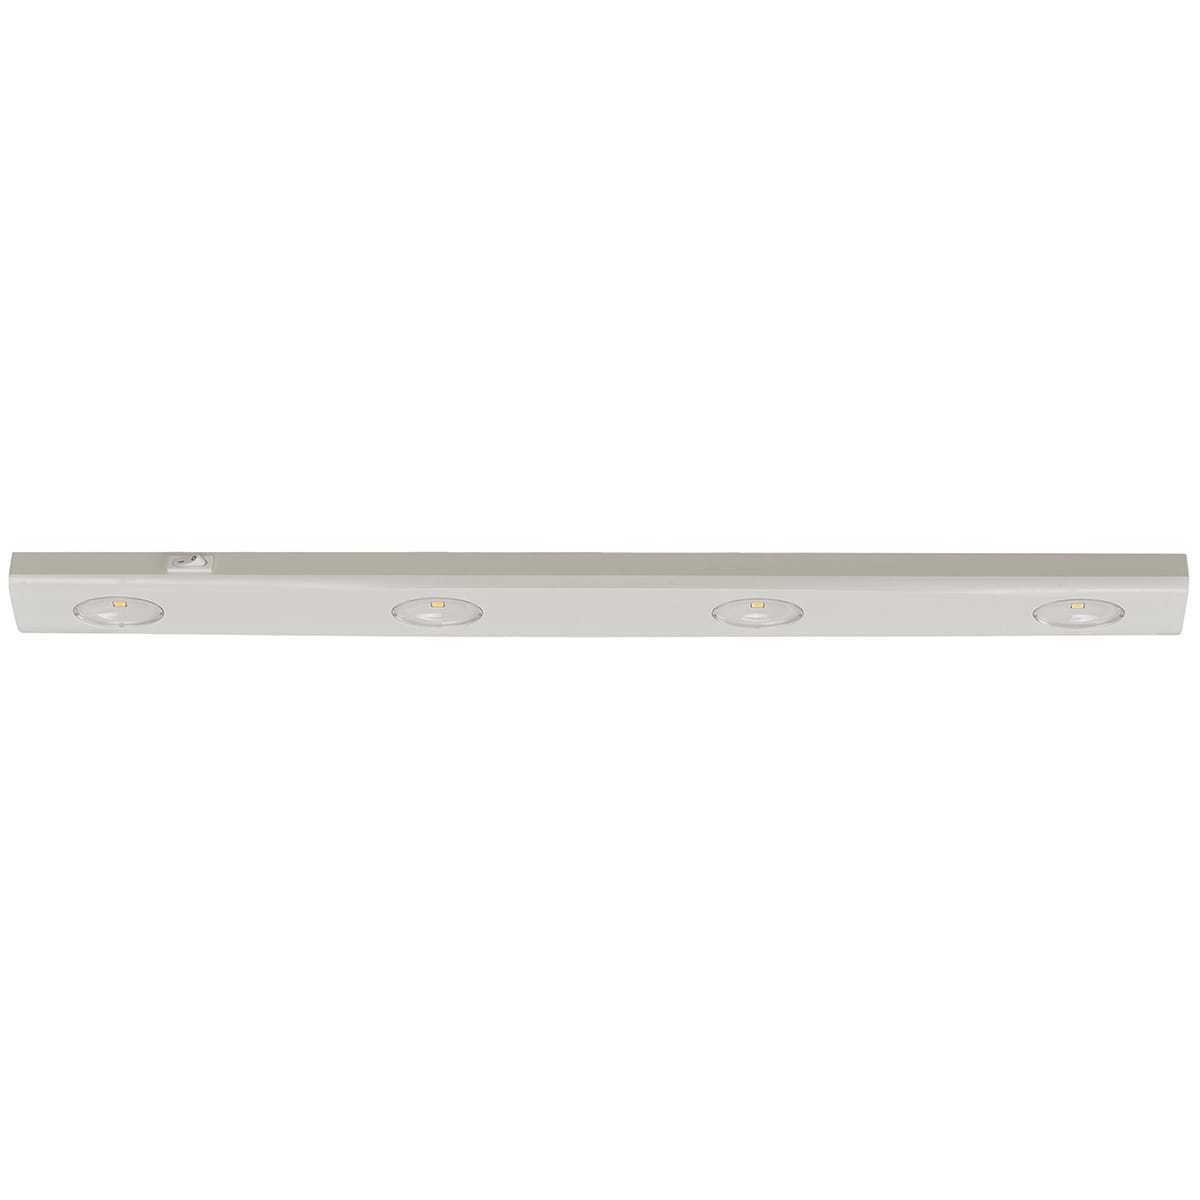 Keukenkast verlichting - onderbouw - werkbladverlichting - onderbouwverlichting - meubelarmatuur 55 cm -  Wit 4 x 1W Led - Serie Meubelarmatuur - Spots - High Light - S790600